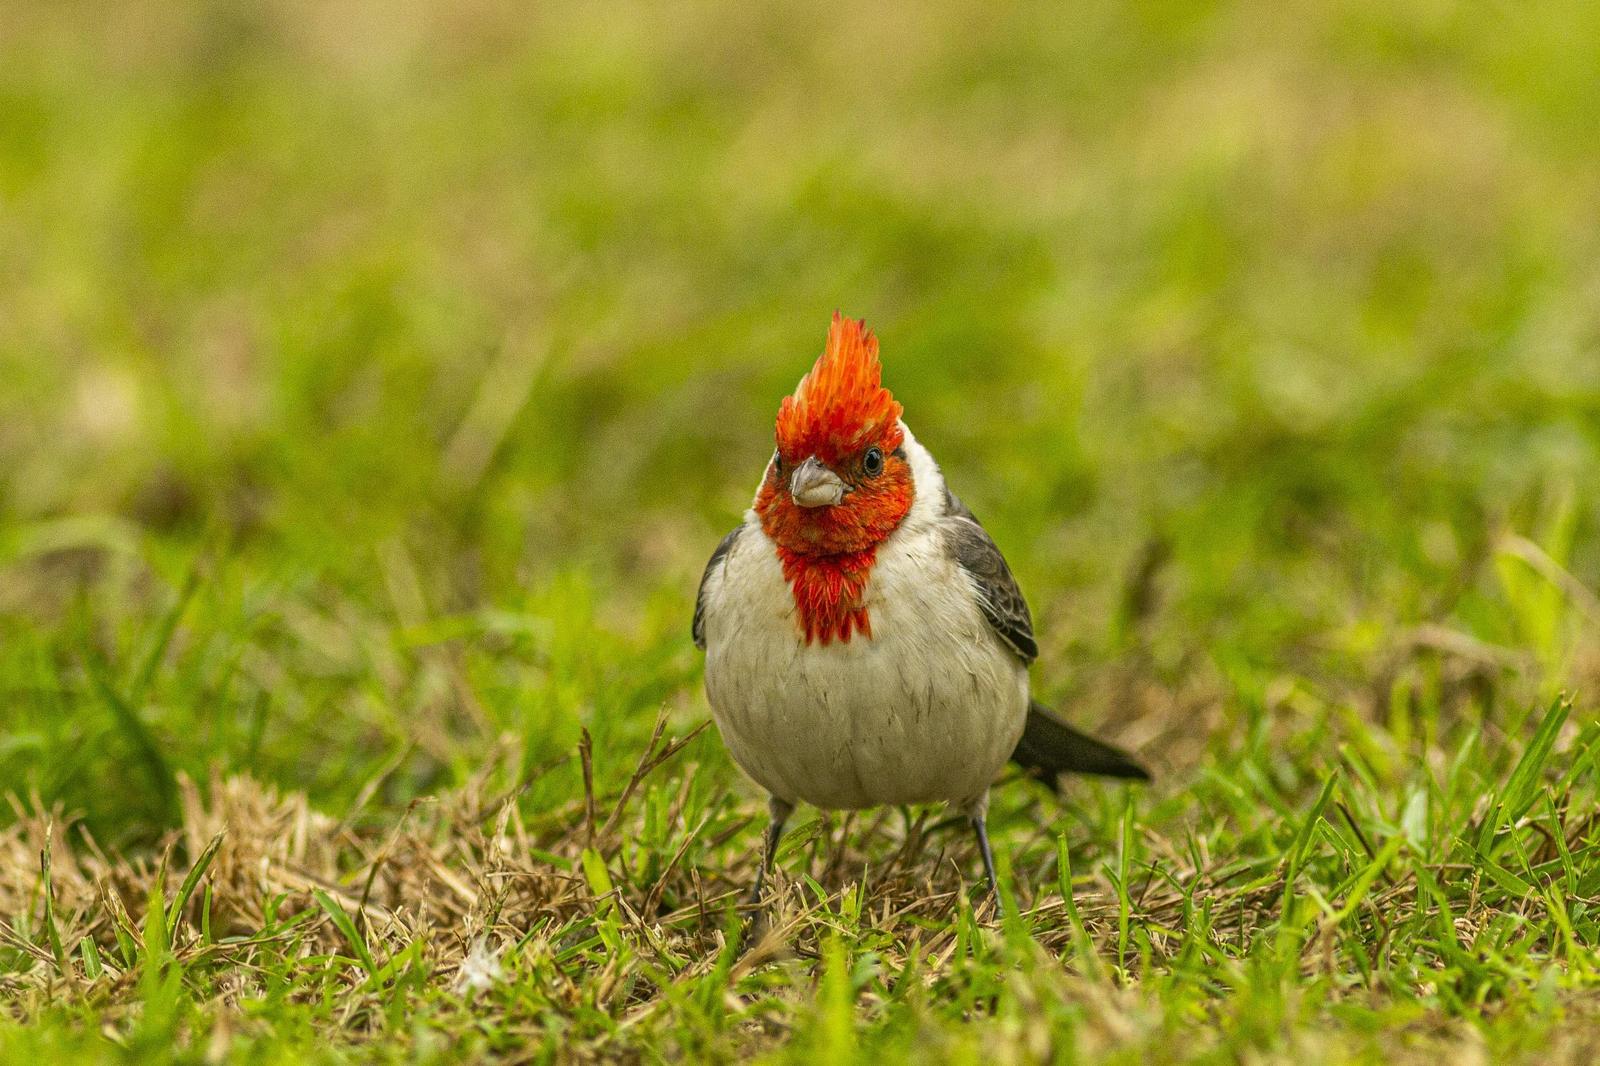 Red-crested Cardinal Photo by David Rebata